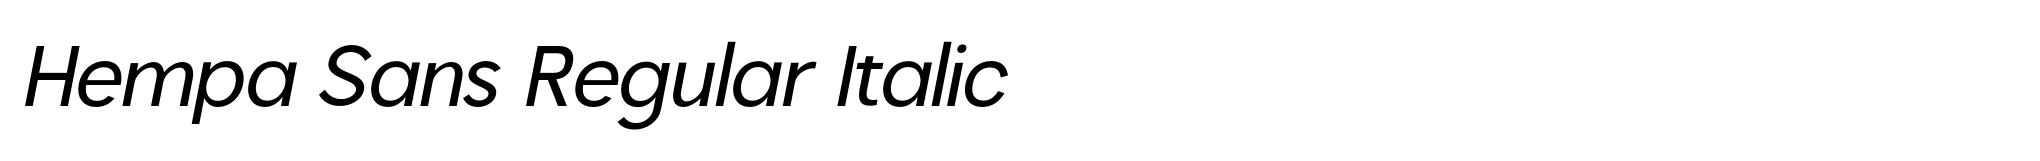 Hempa Sans Regular Italic image